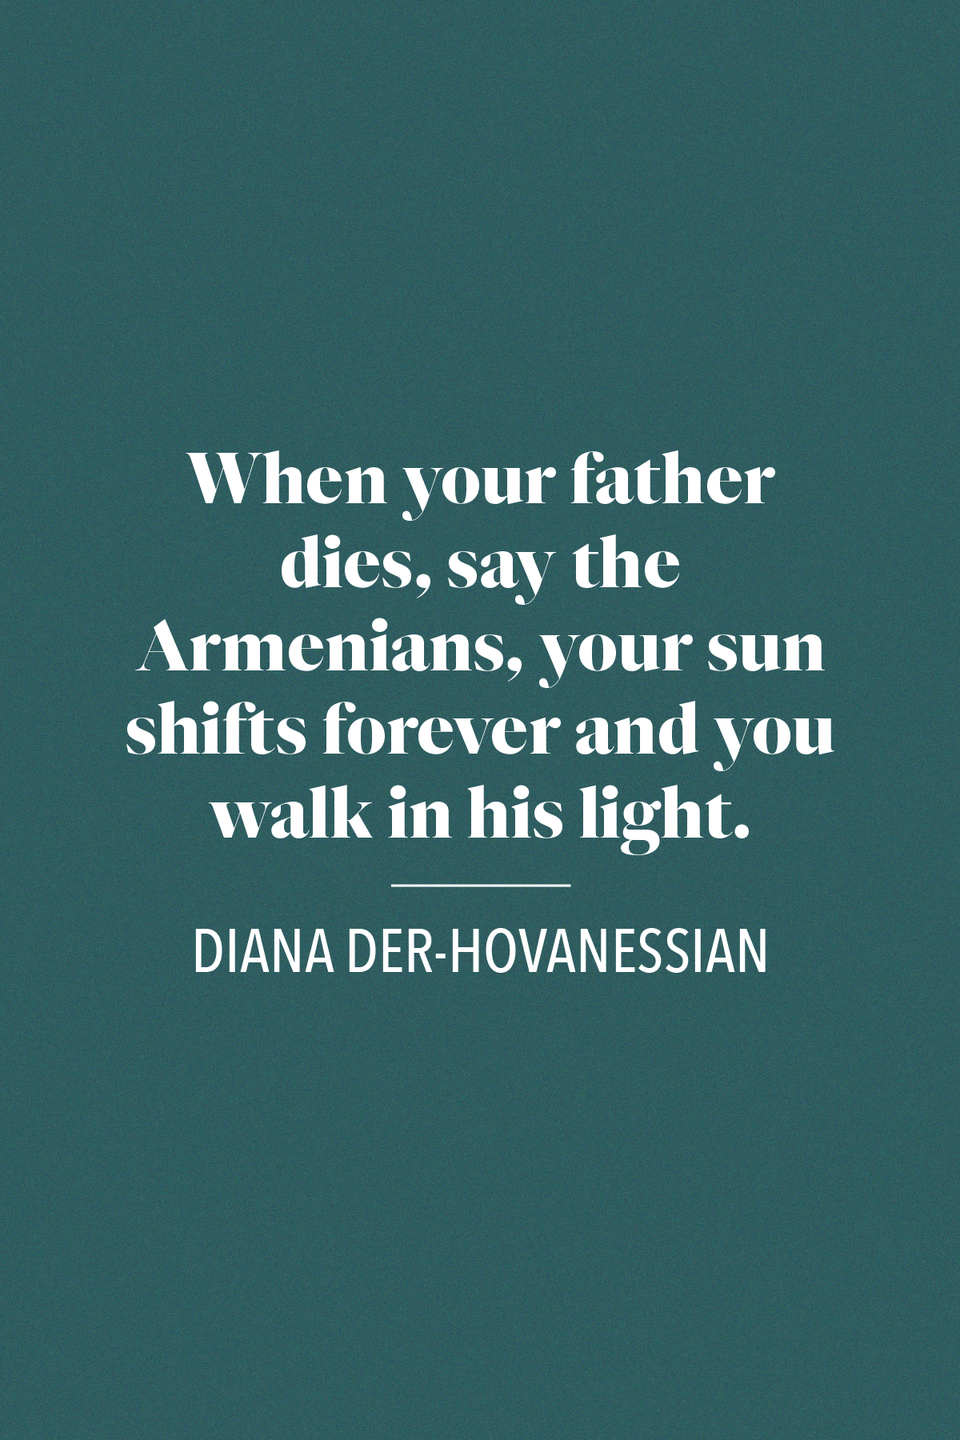 Diana Der-Hovanessian